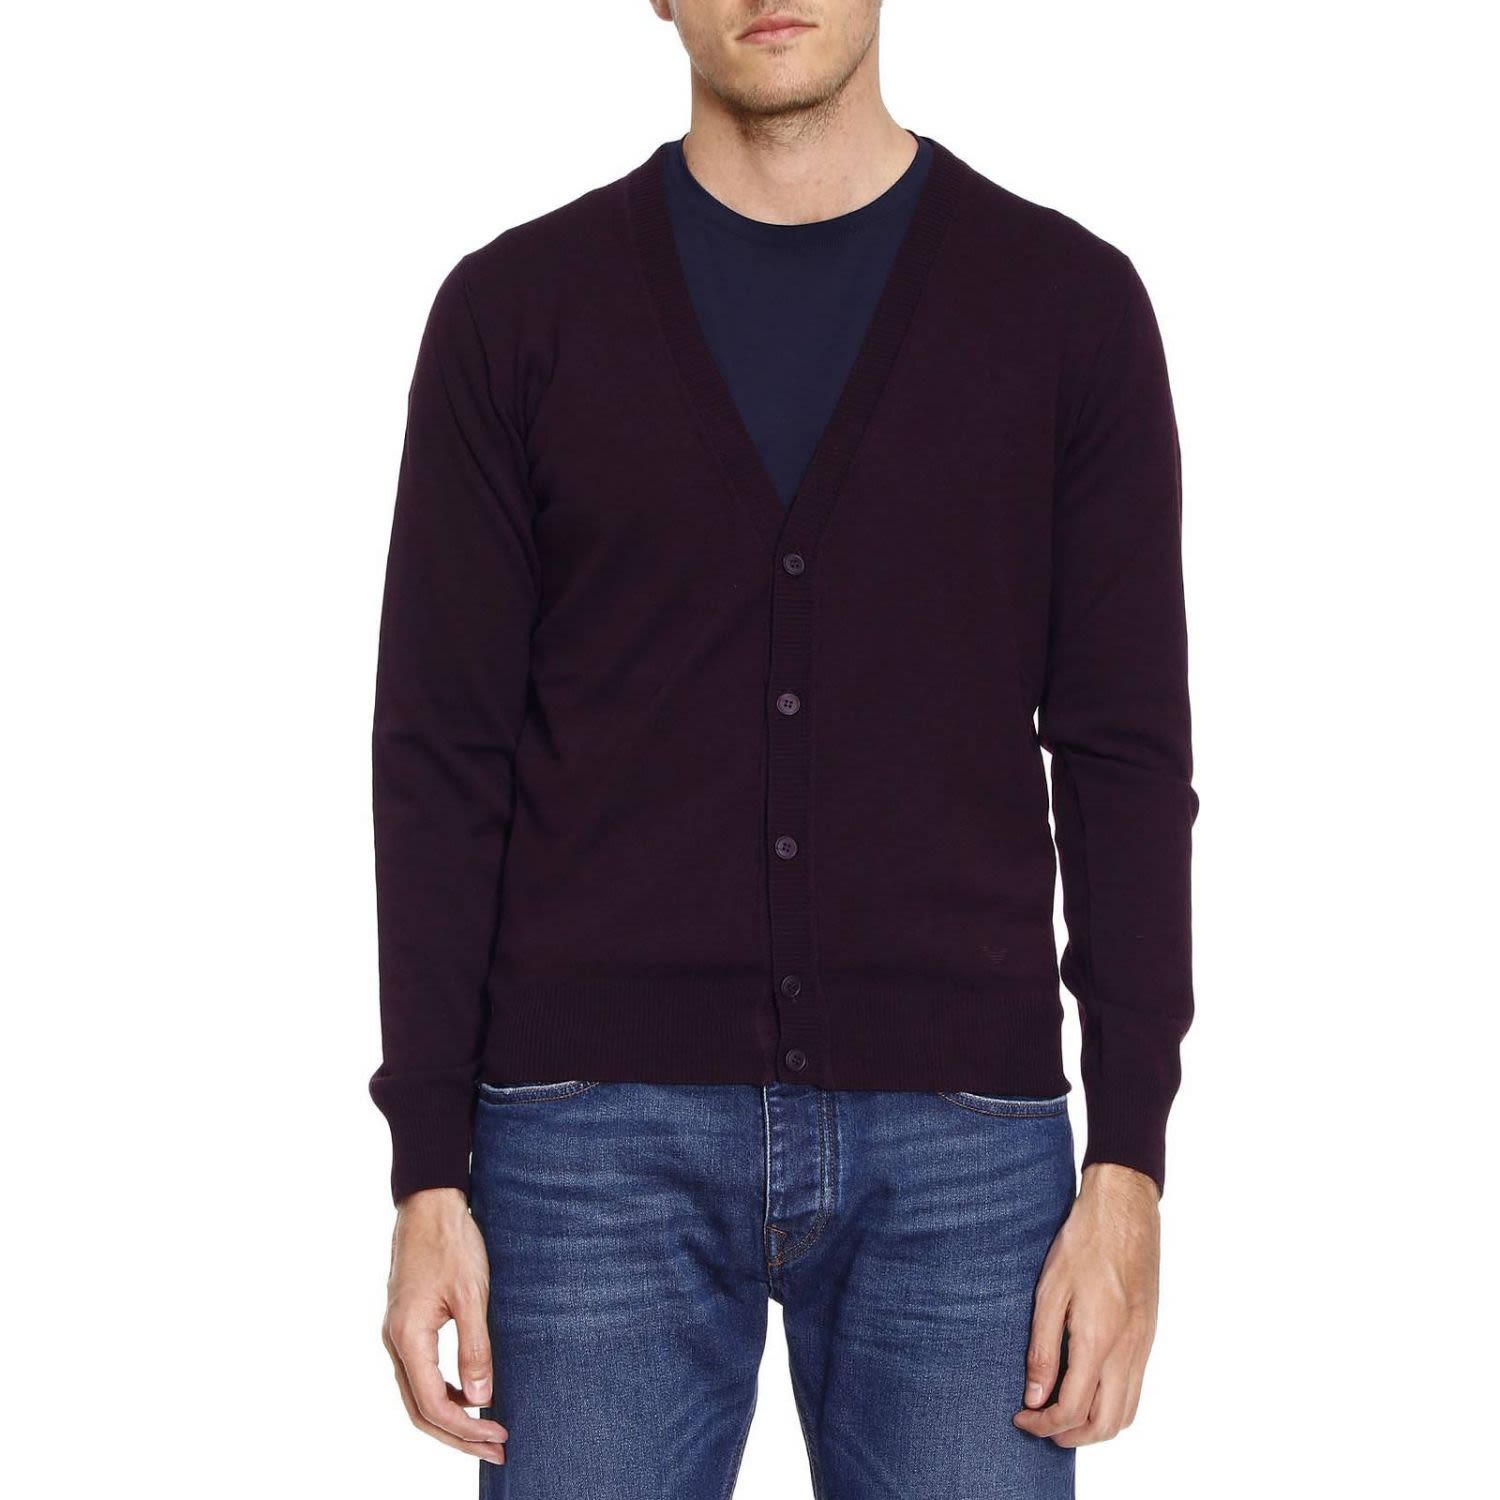 Emporio Armani - Cardigan Sweater Men Emporio Armani - burgundy, Men's ...